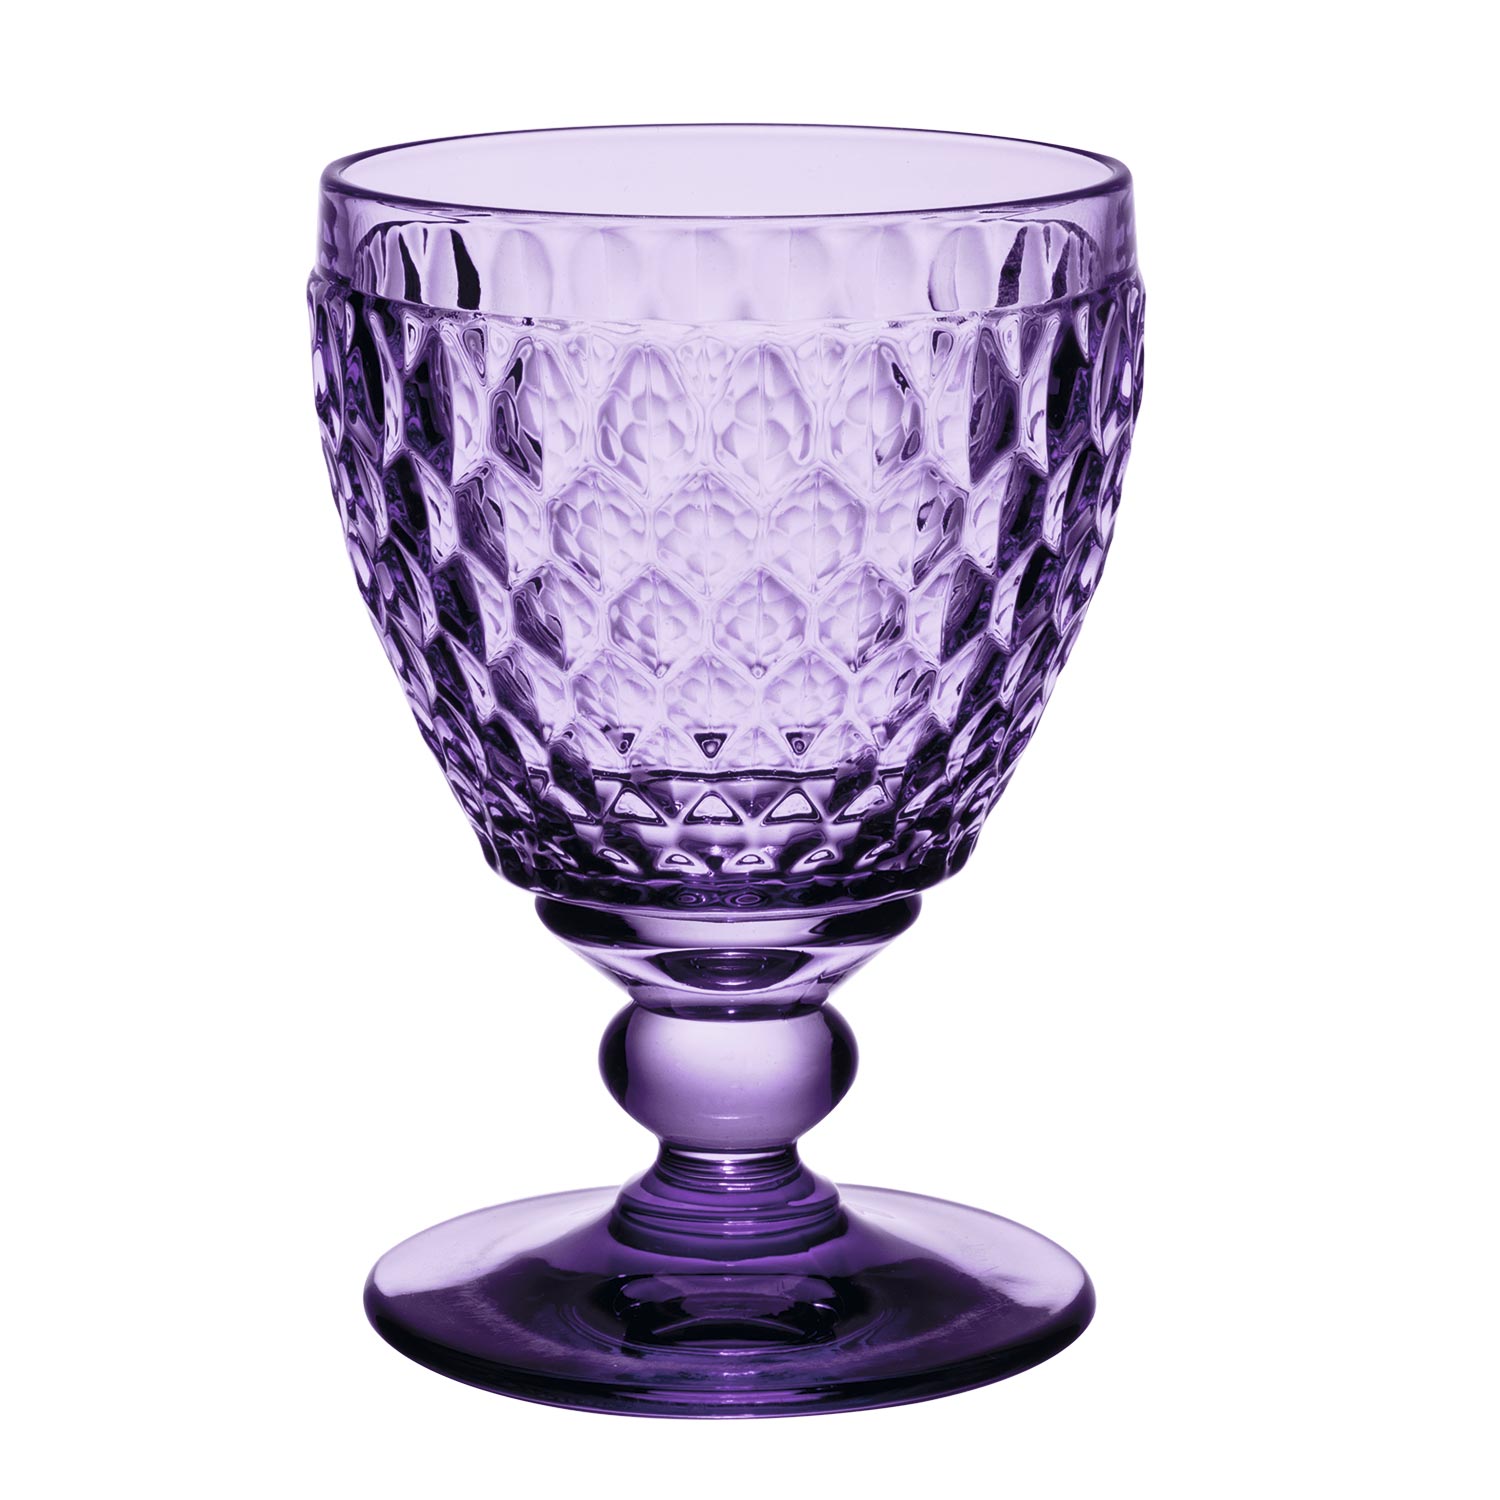 Boston Lavender Бокал для белого вина 120 мм, объем 230 мл Villeroy & Boch
https://spb.v-b.ru
г.Санкт-Петербург
eshop@v-b.spb.ru
+7(812)3801977